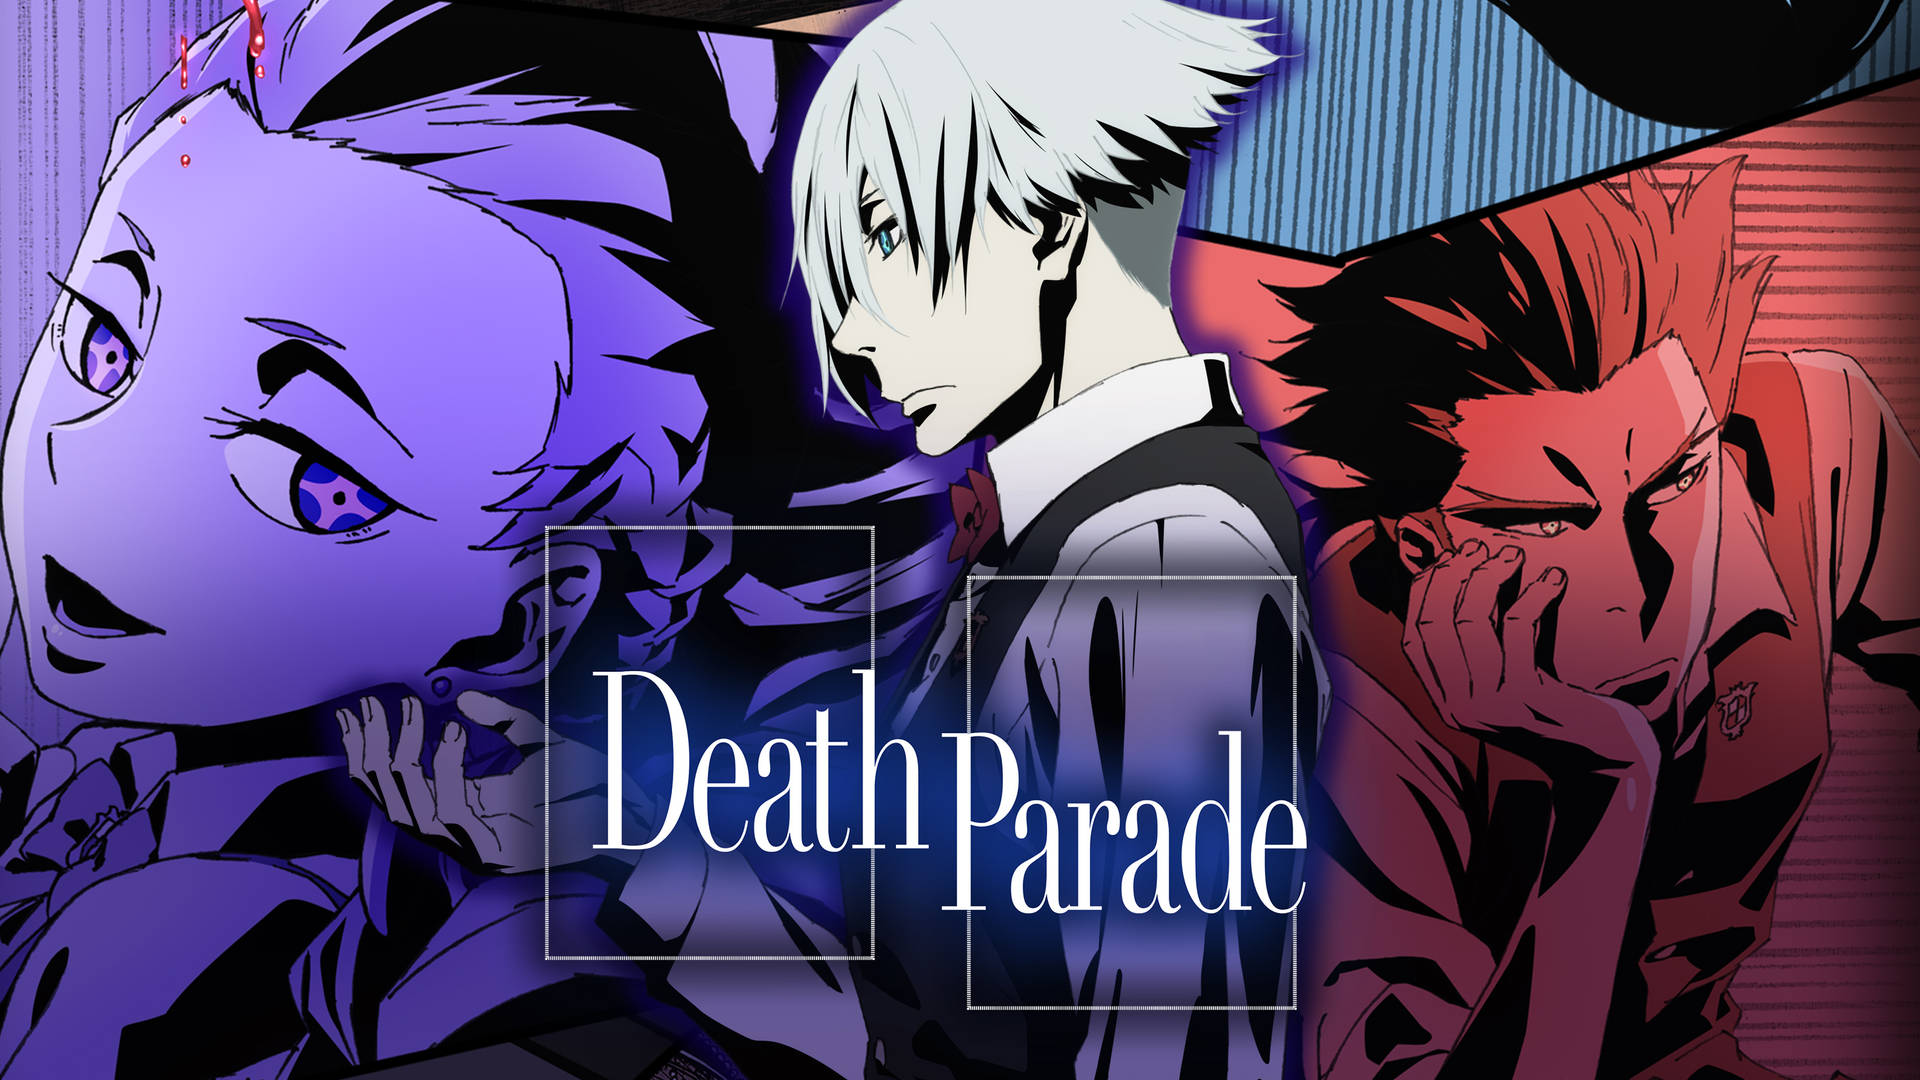 Cool Death Parade Poster Art Wallpaper